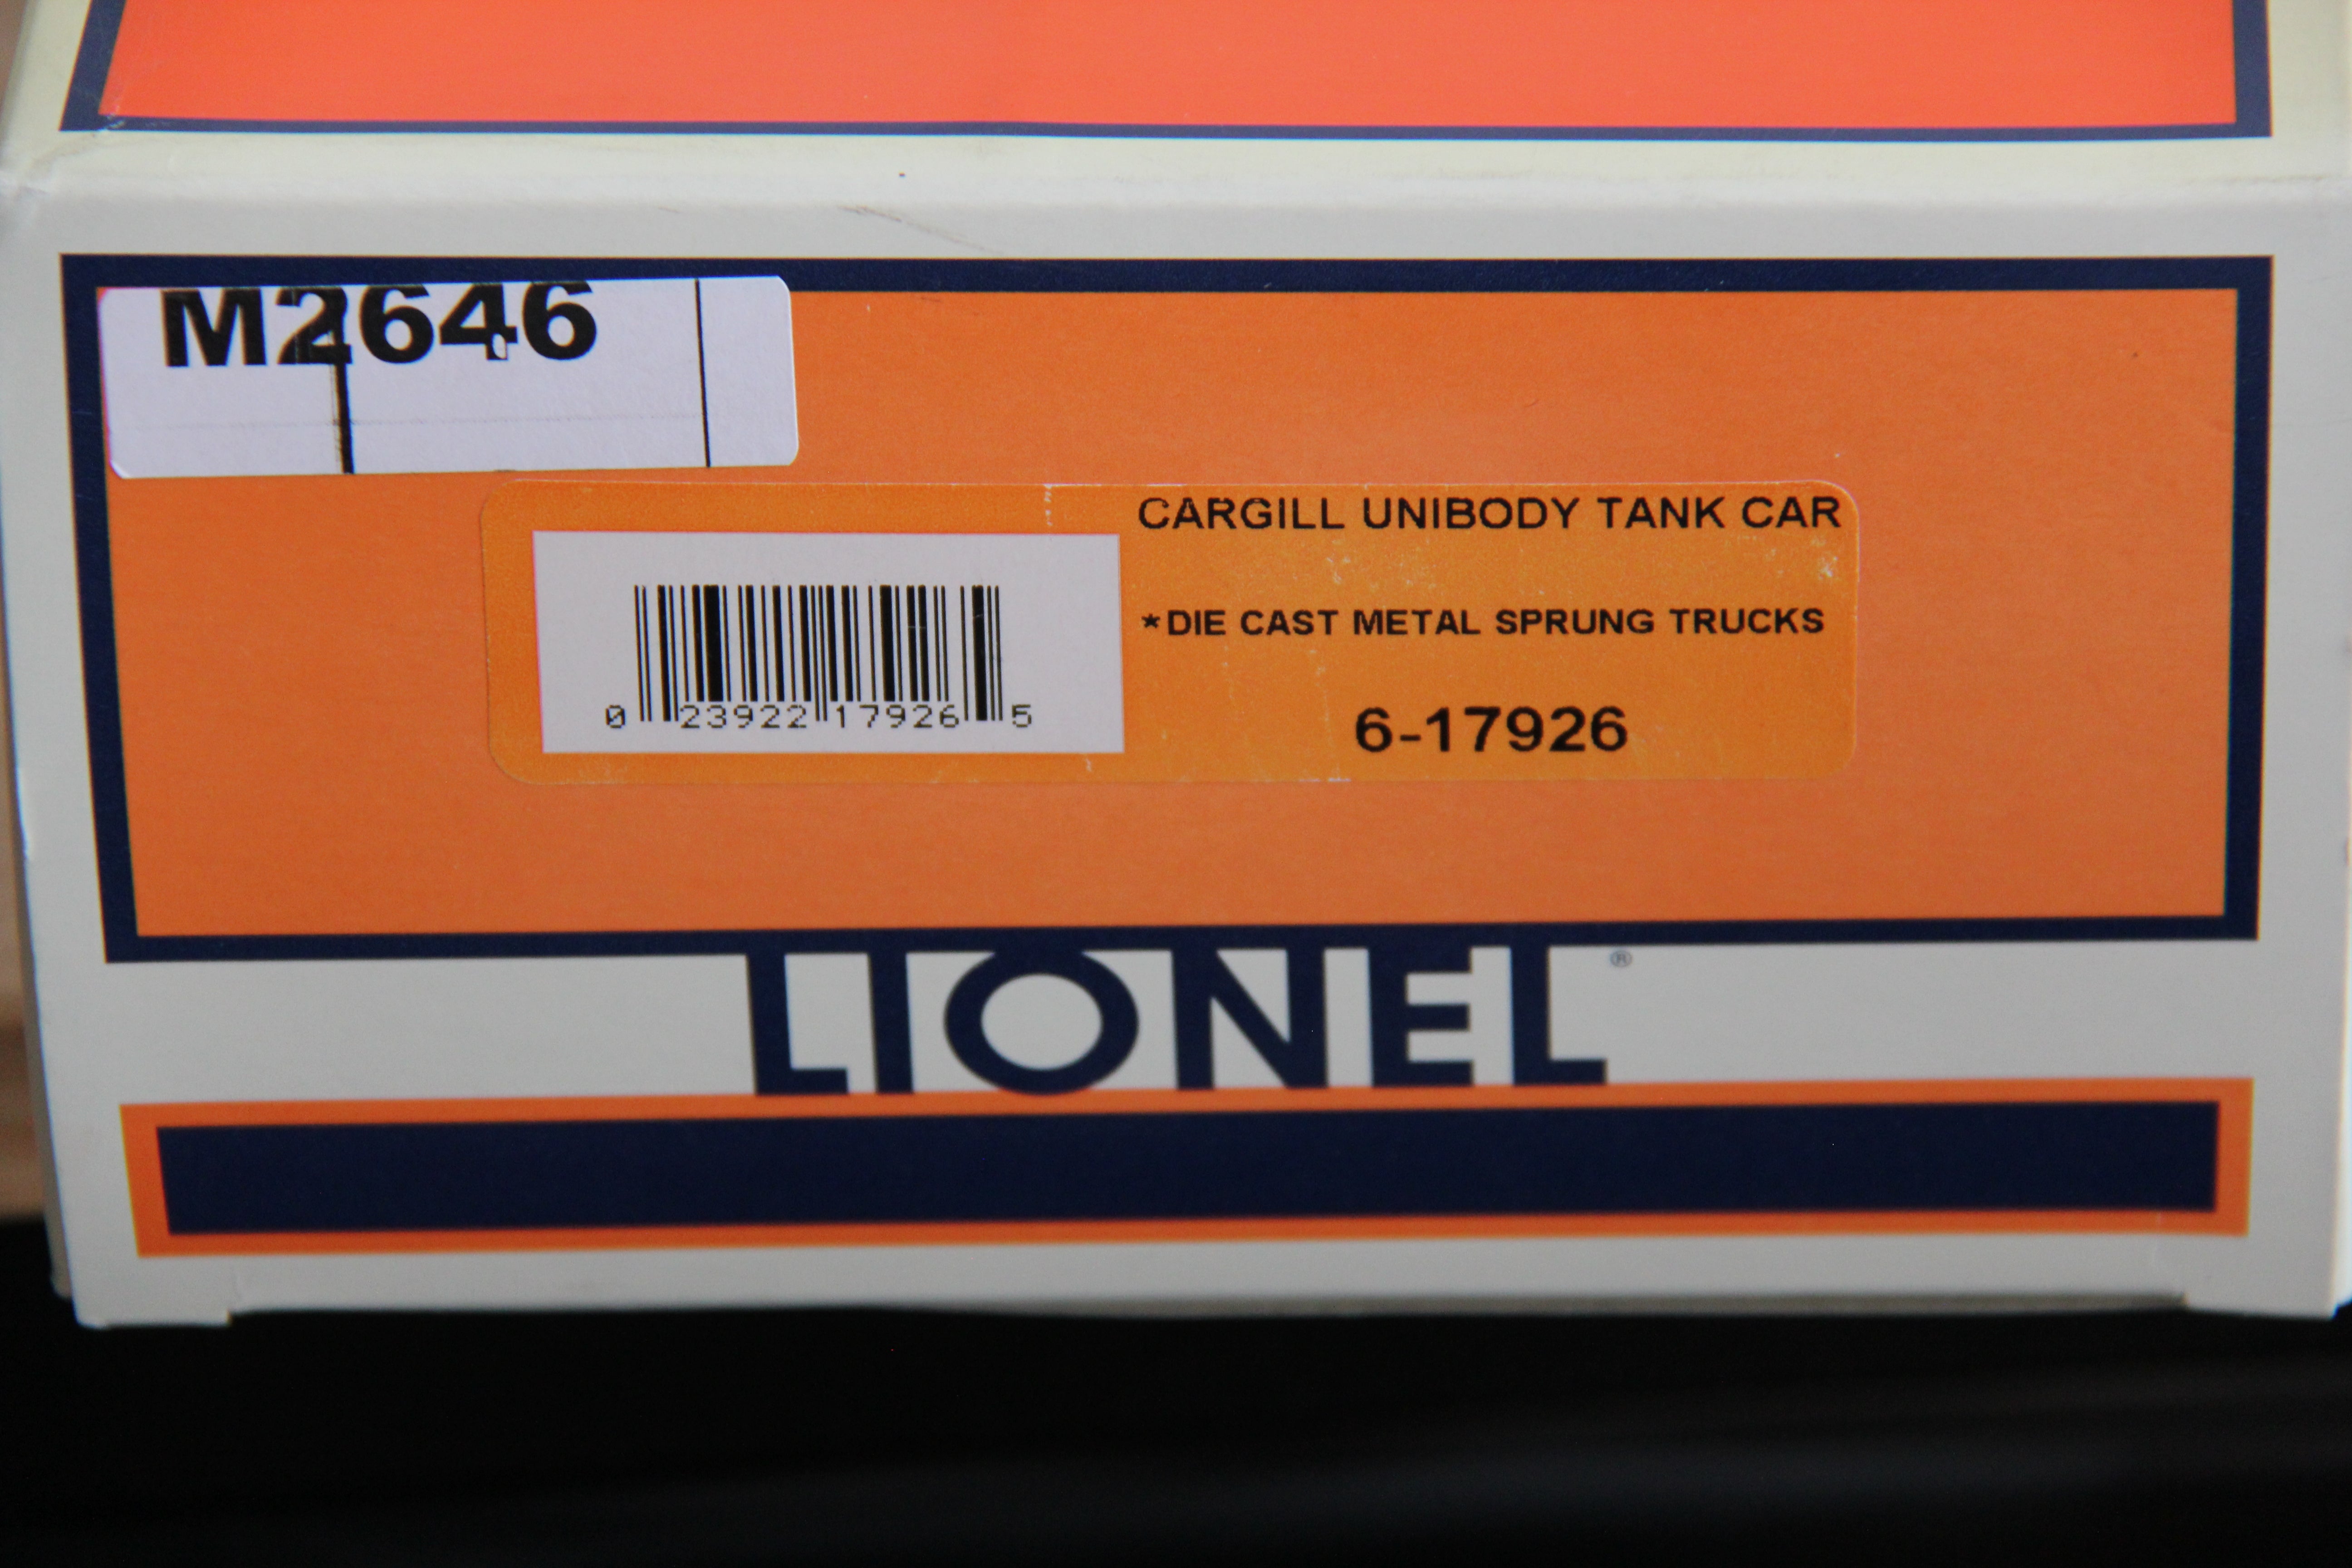 Lionel 6-17926 Cargill Unibody Tank Car-Second hand-M2646